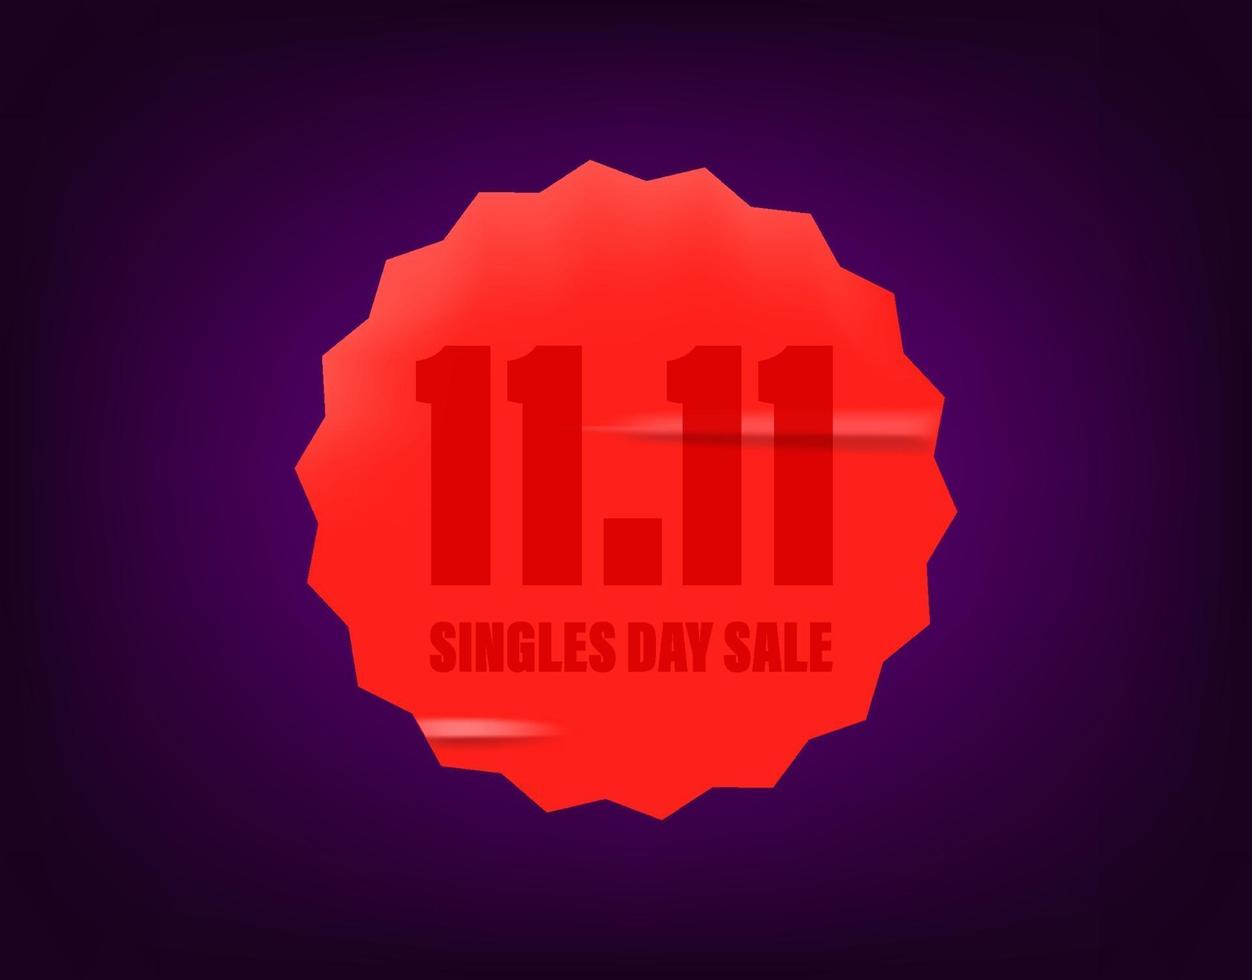 November 11 singles day sale banner vector